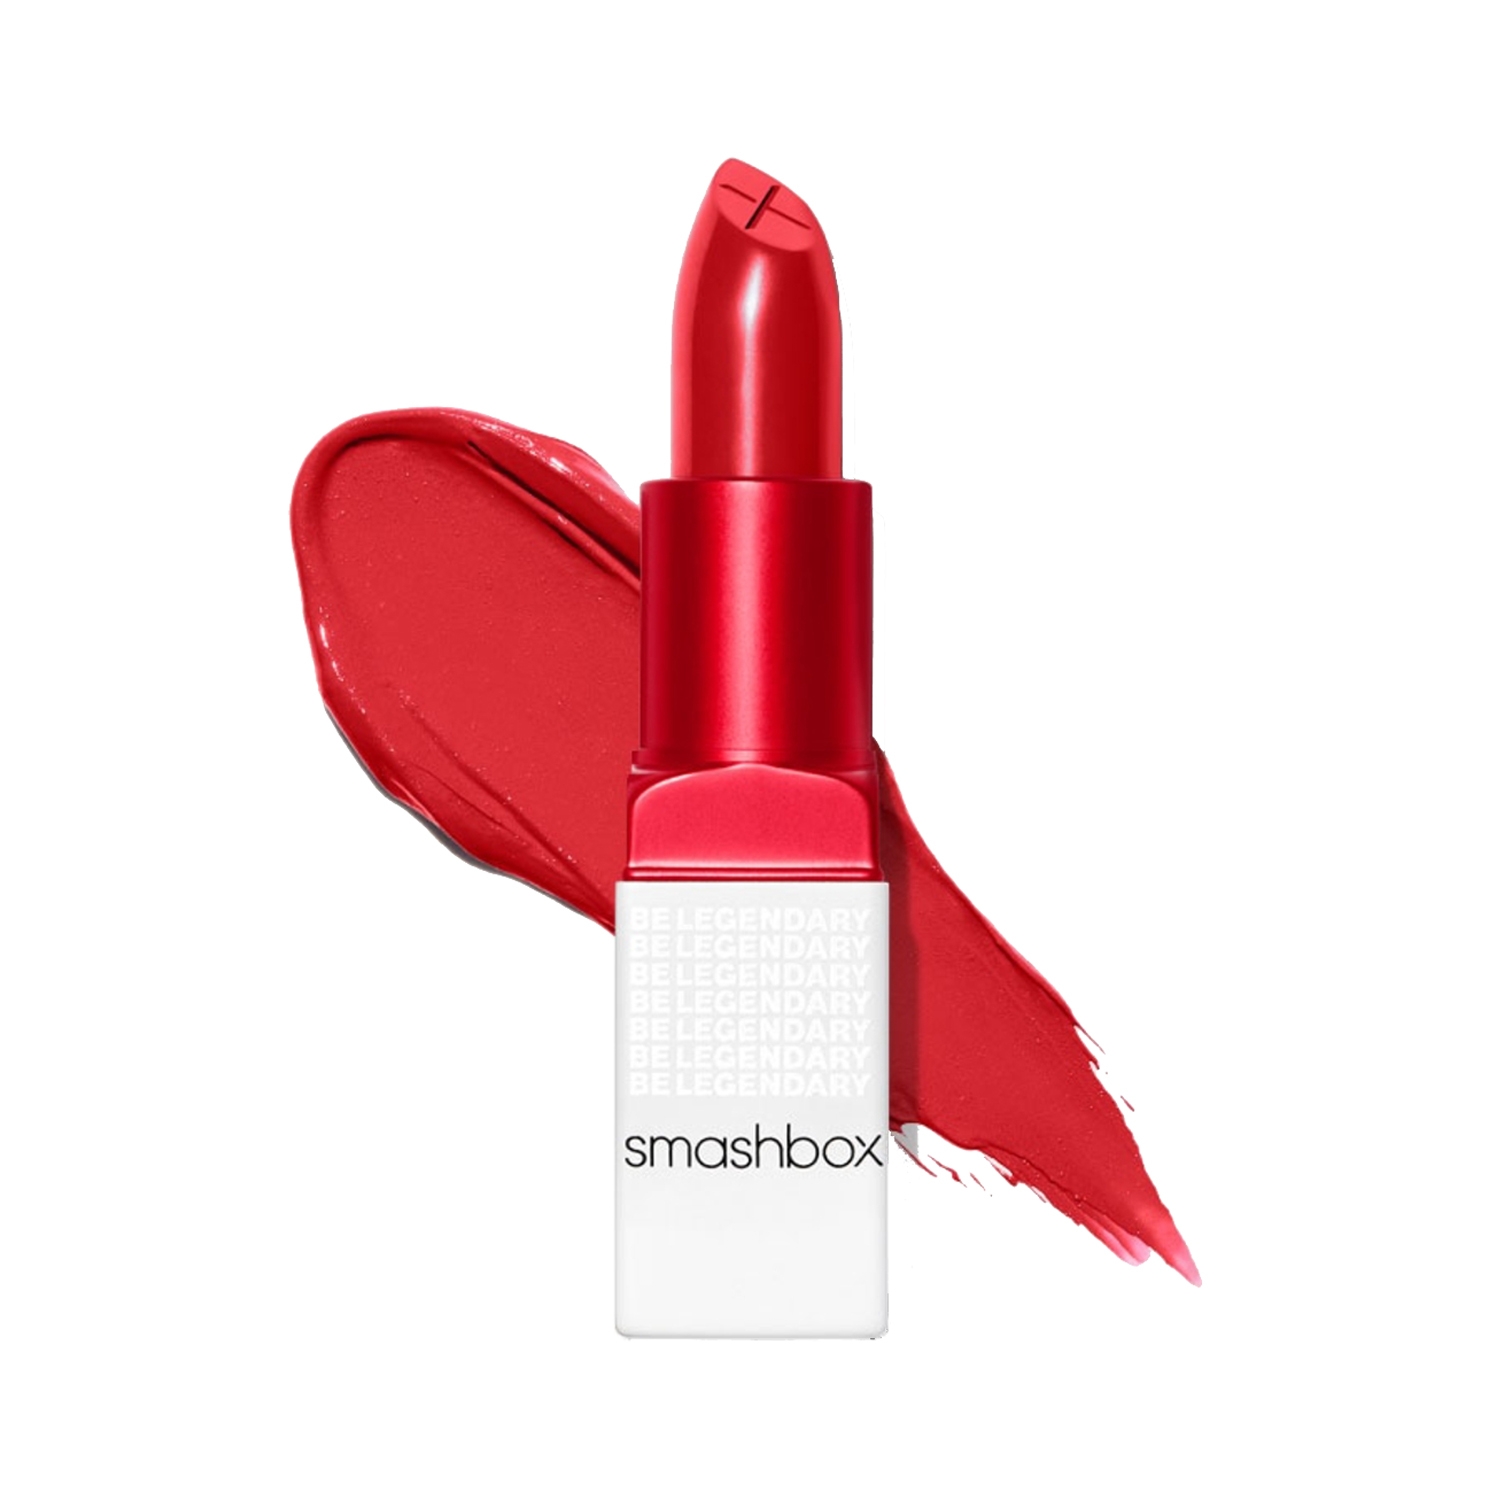 Smashbox Be Legendary Prime & Plush Lipstick - Orangey Red (3.4g)